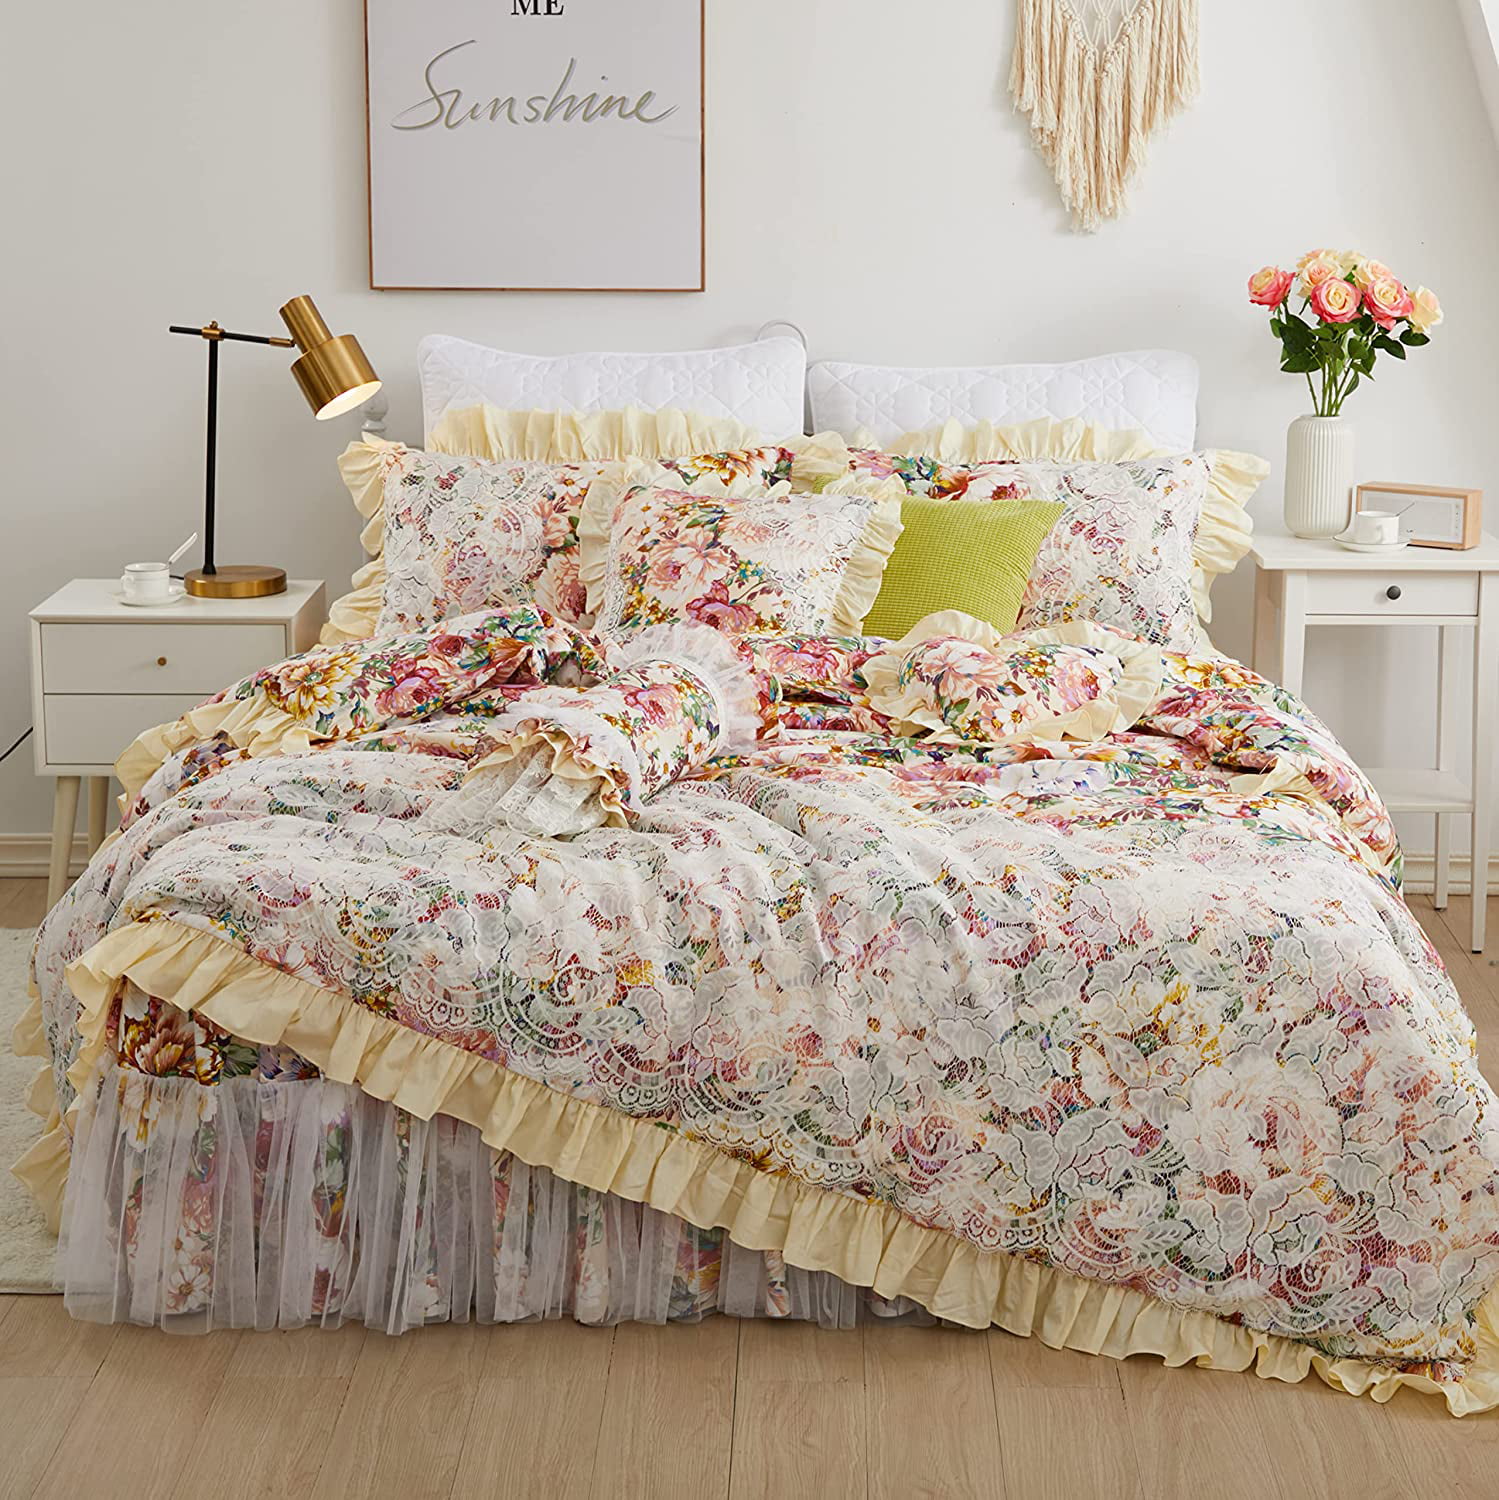 Queen FADFAY,Romantic Flower Print Bedding Set,Floral Bed Set,Princess Lace Ruffle Duvet Cover King Queen Twin,4Pcs